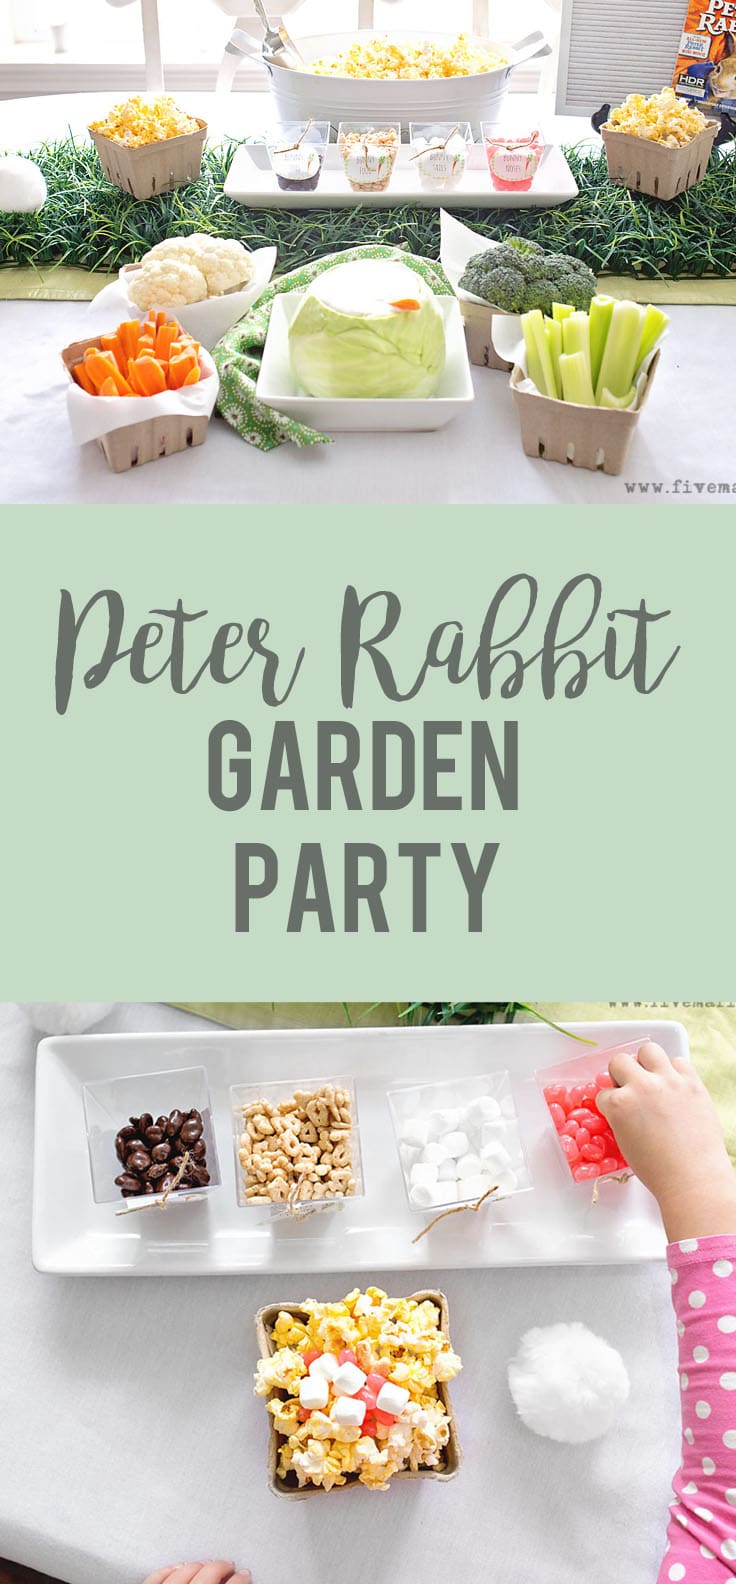 Peter Rabbit Garden Party with Bunny Bar | Five Marigolds